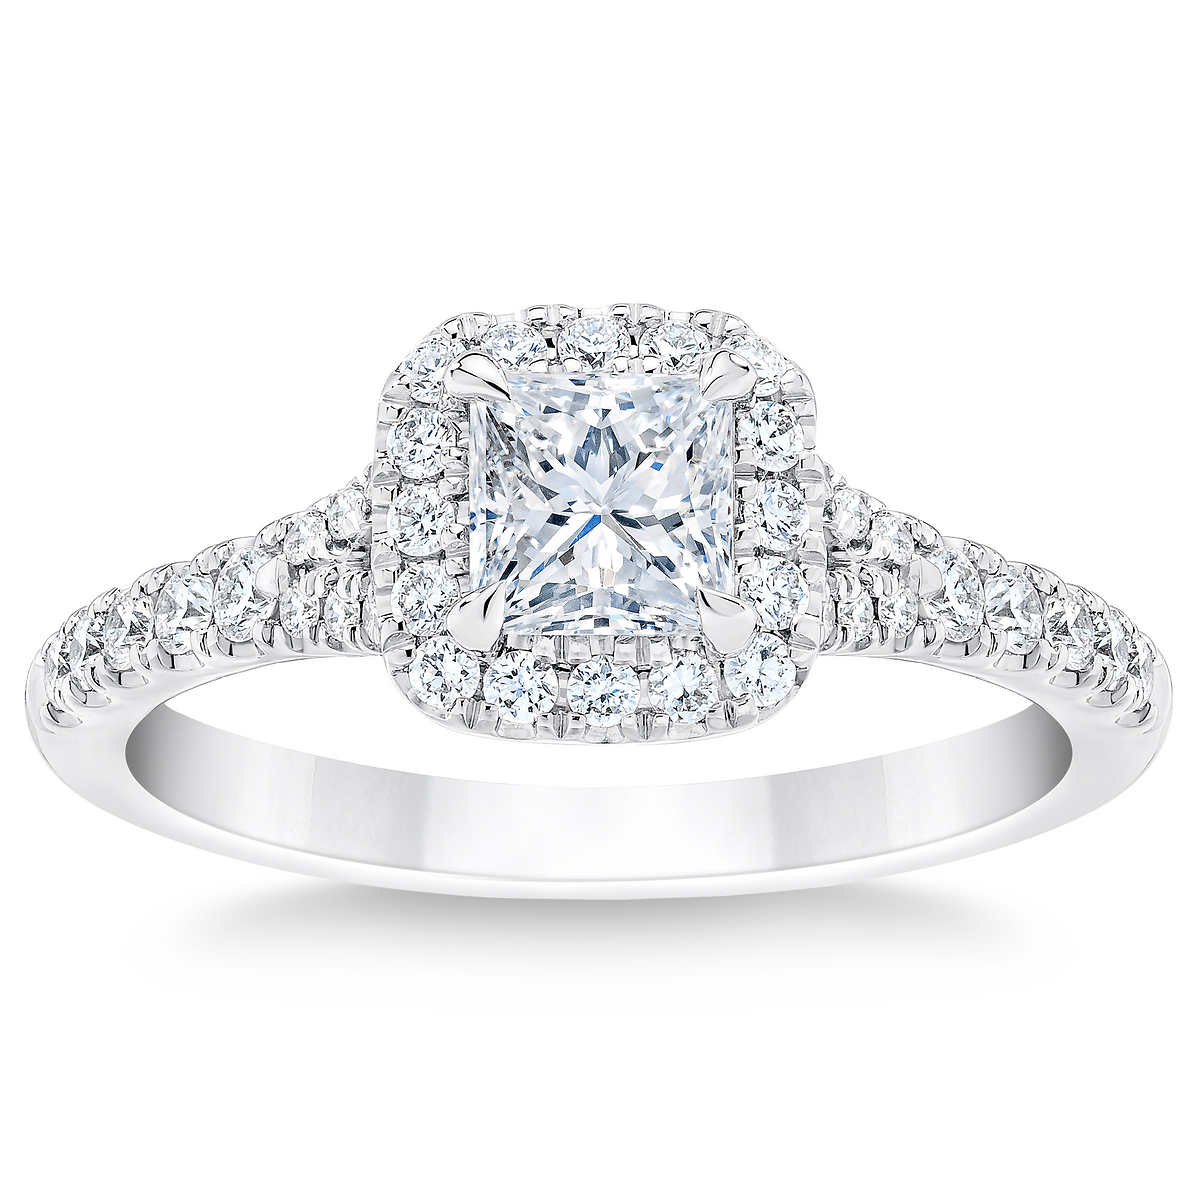 Princess Cut and Round Brilliant Diamond Ring (1.07 ctw) | Costco